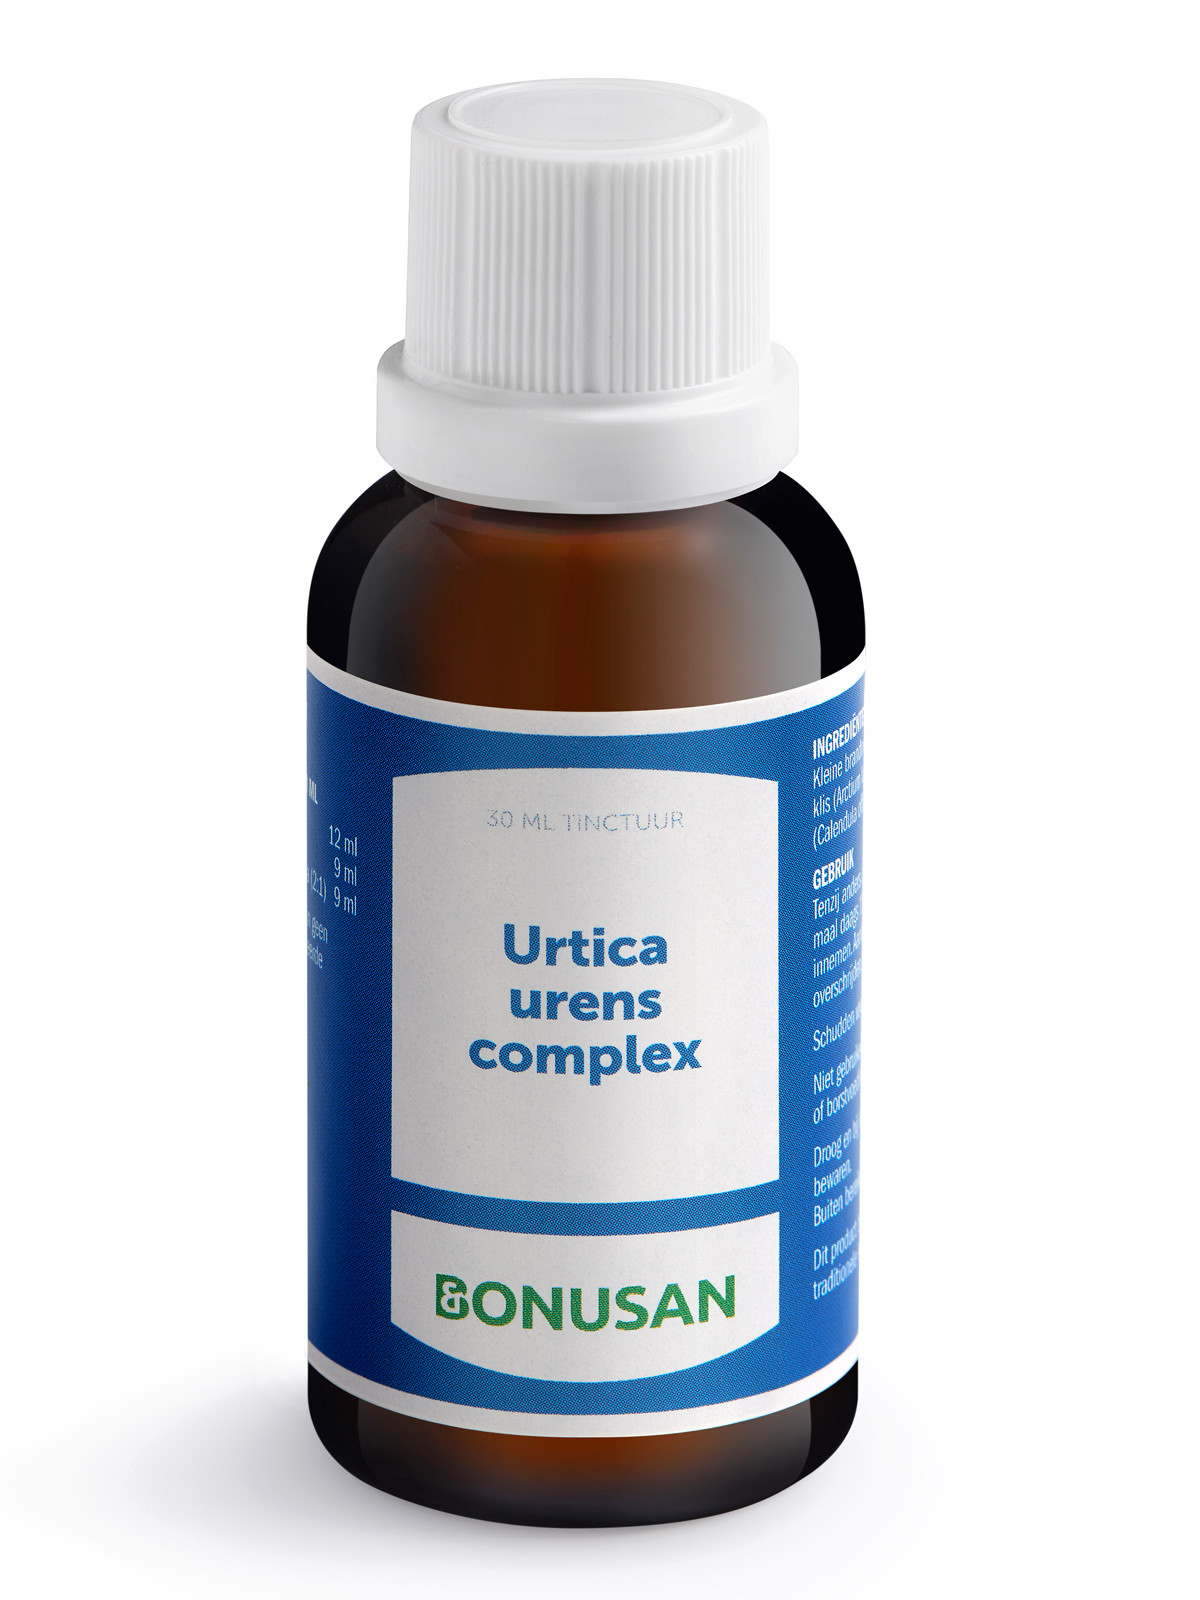 Bonusan - Urtica urens complex